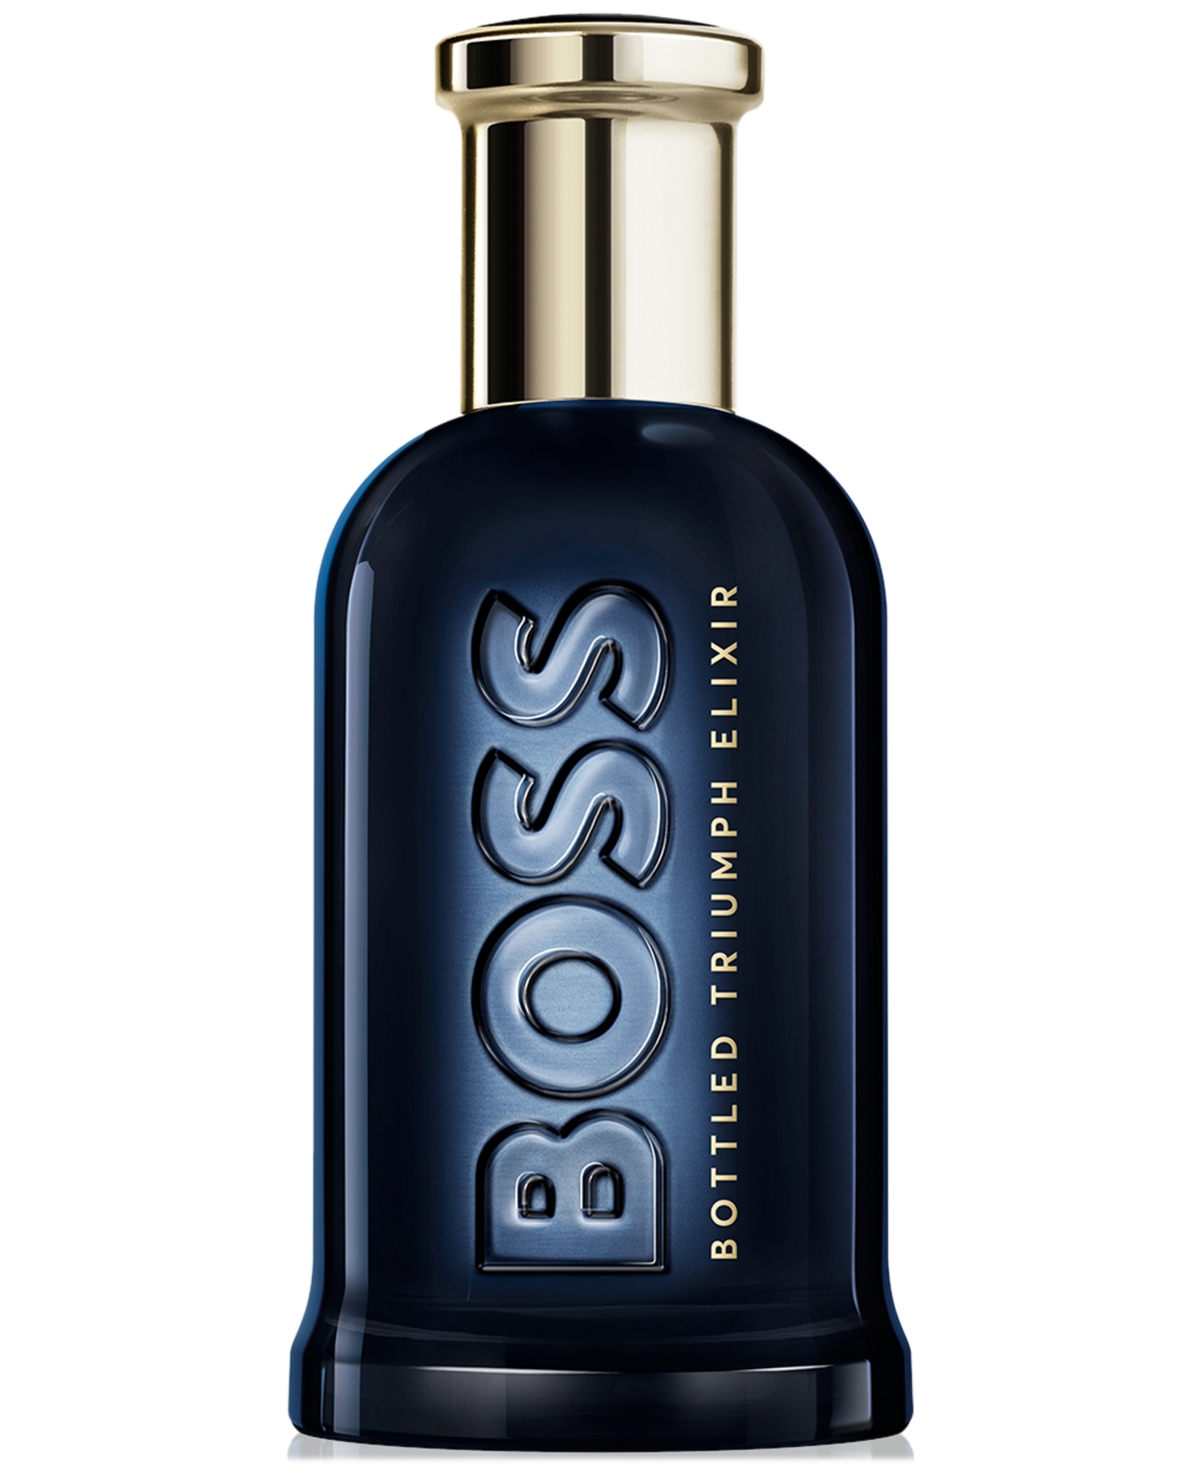 Shop Hugo Boss Men's Boss Bottled Triumph Elixir Parfum Intense Spray, 3.3 Oz. In No Color